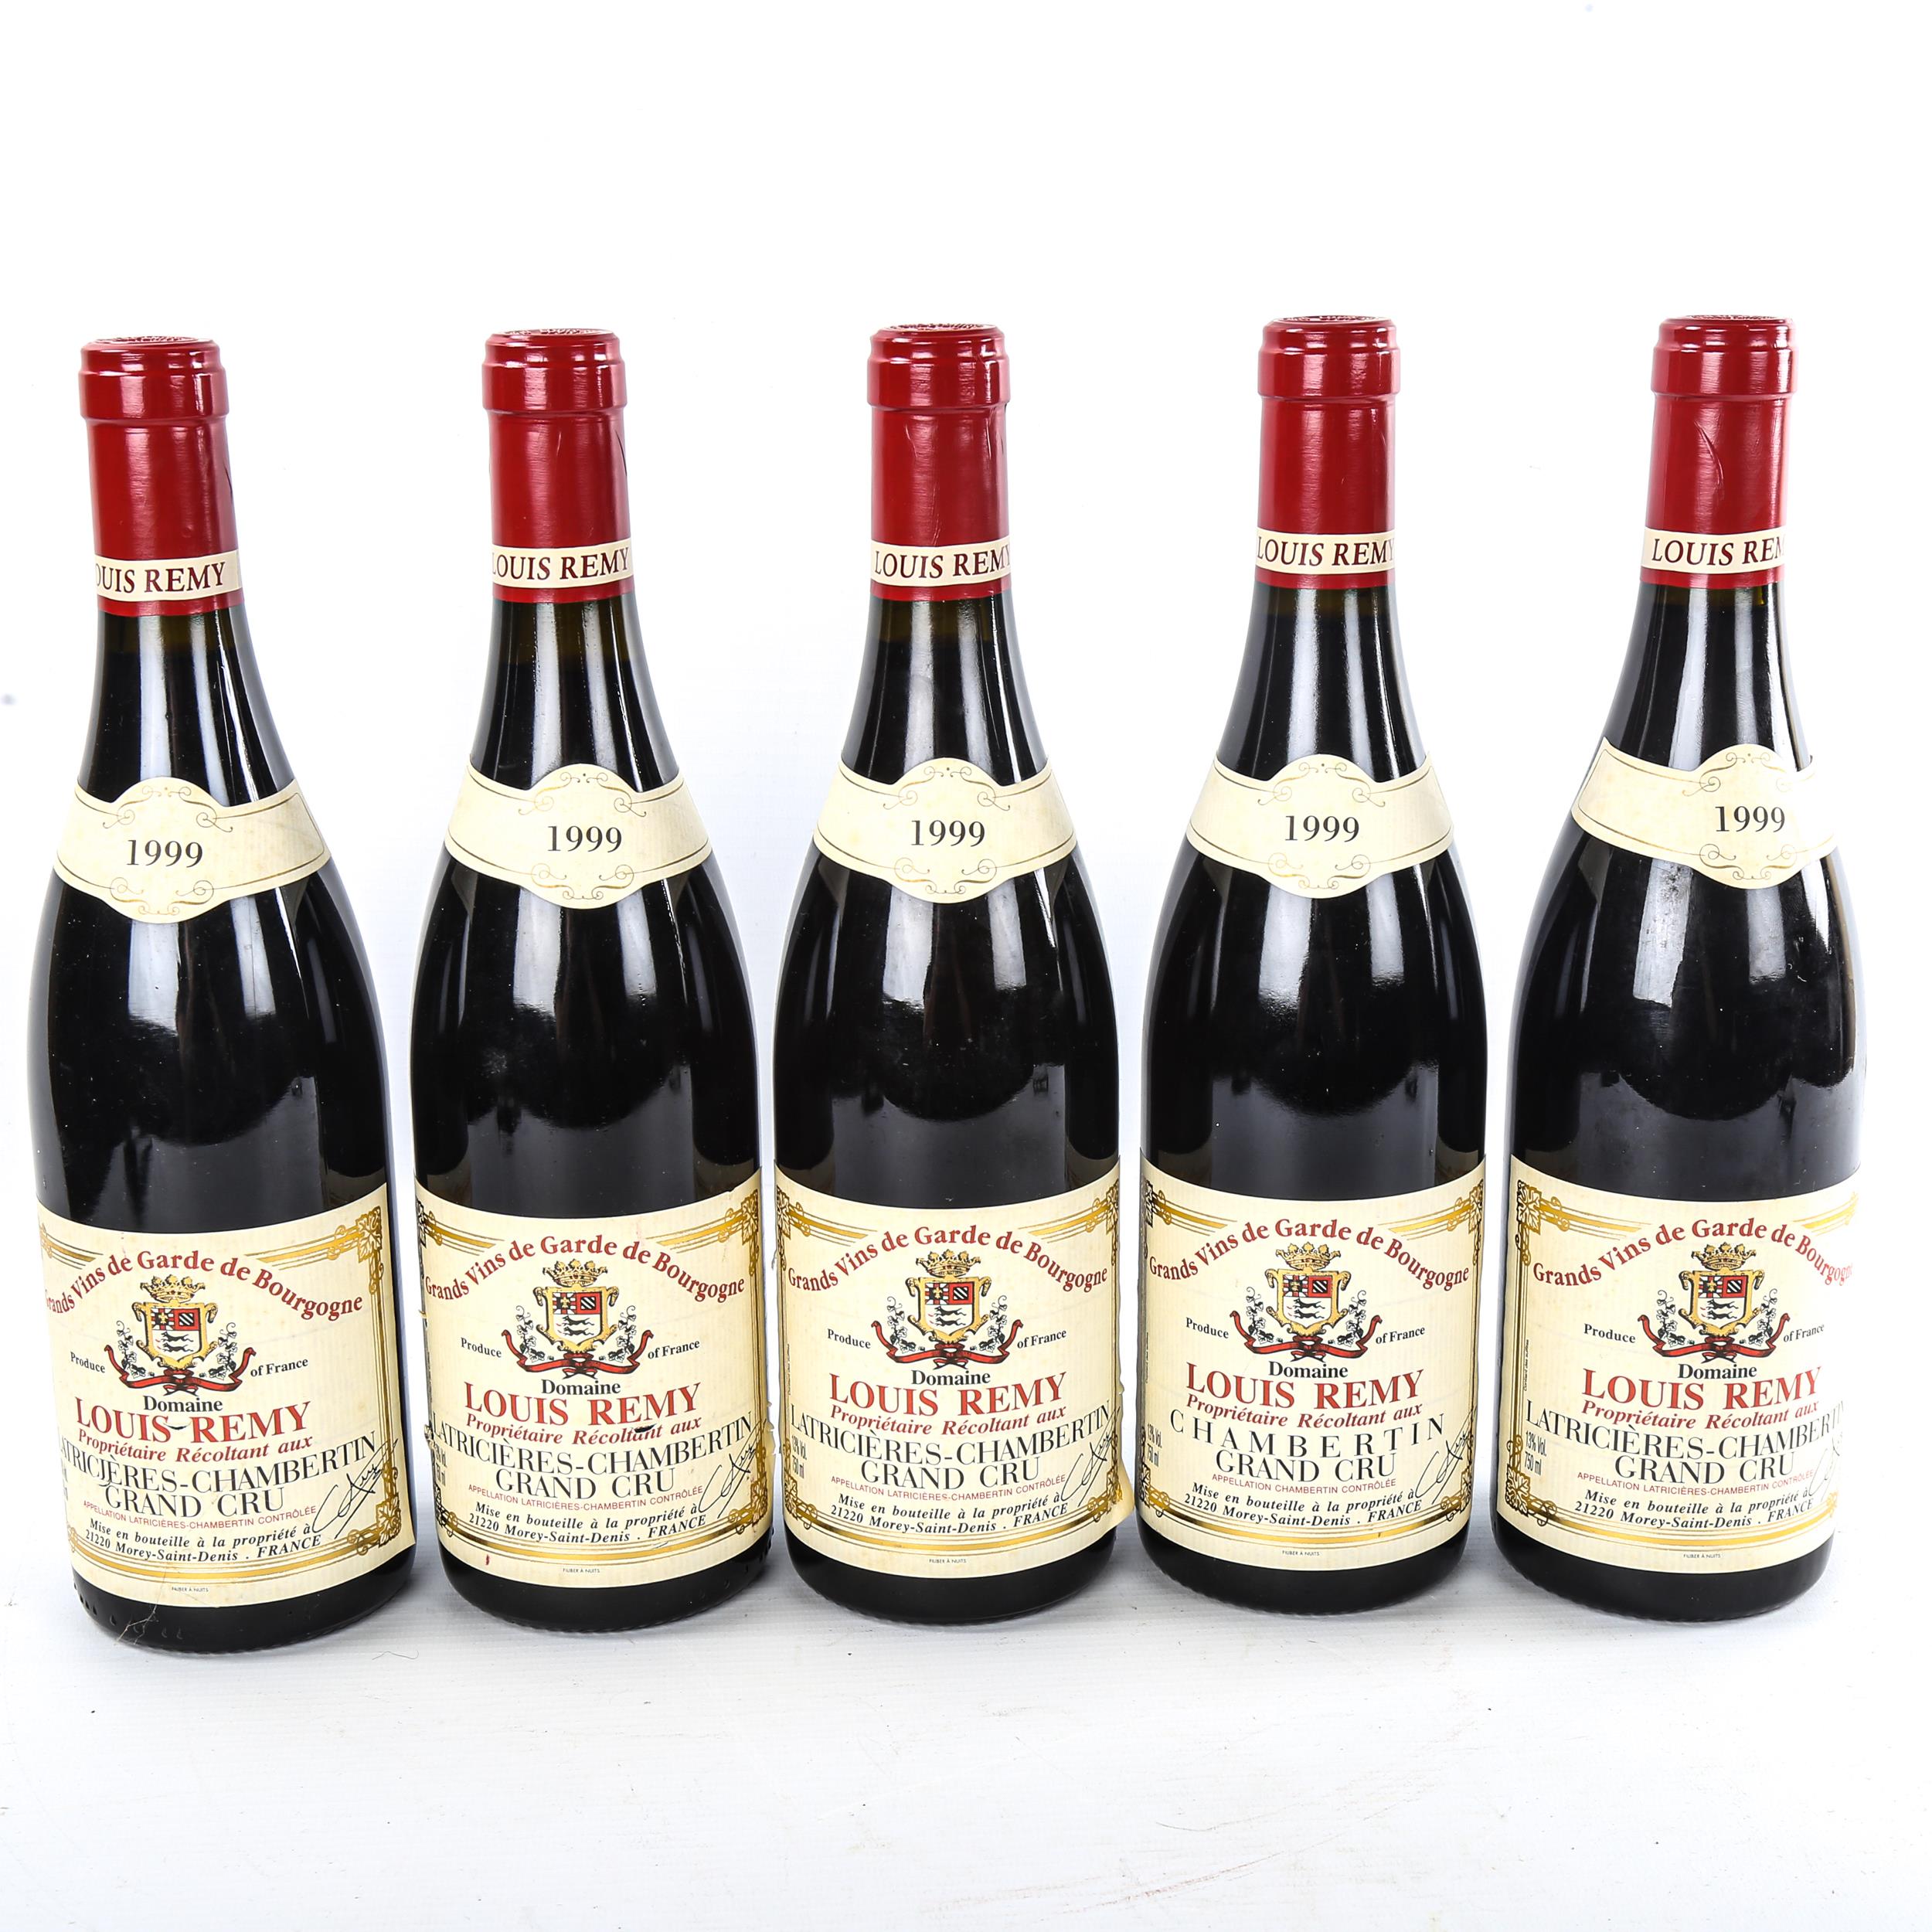 5 bottles of Burgundy wine, 1999 Domaine Louis Remy Latricieres-Chambertin Grand Cru